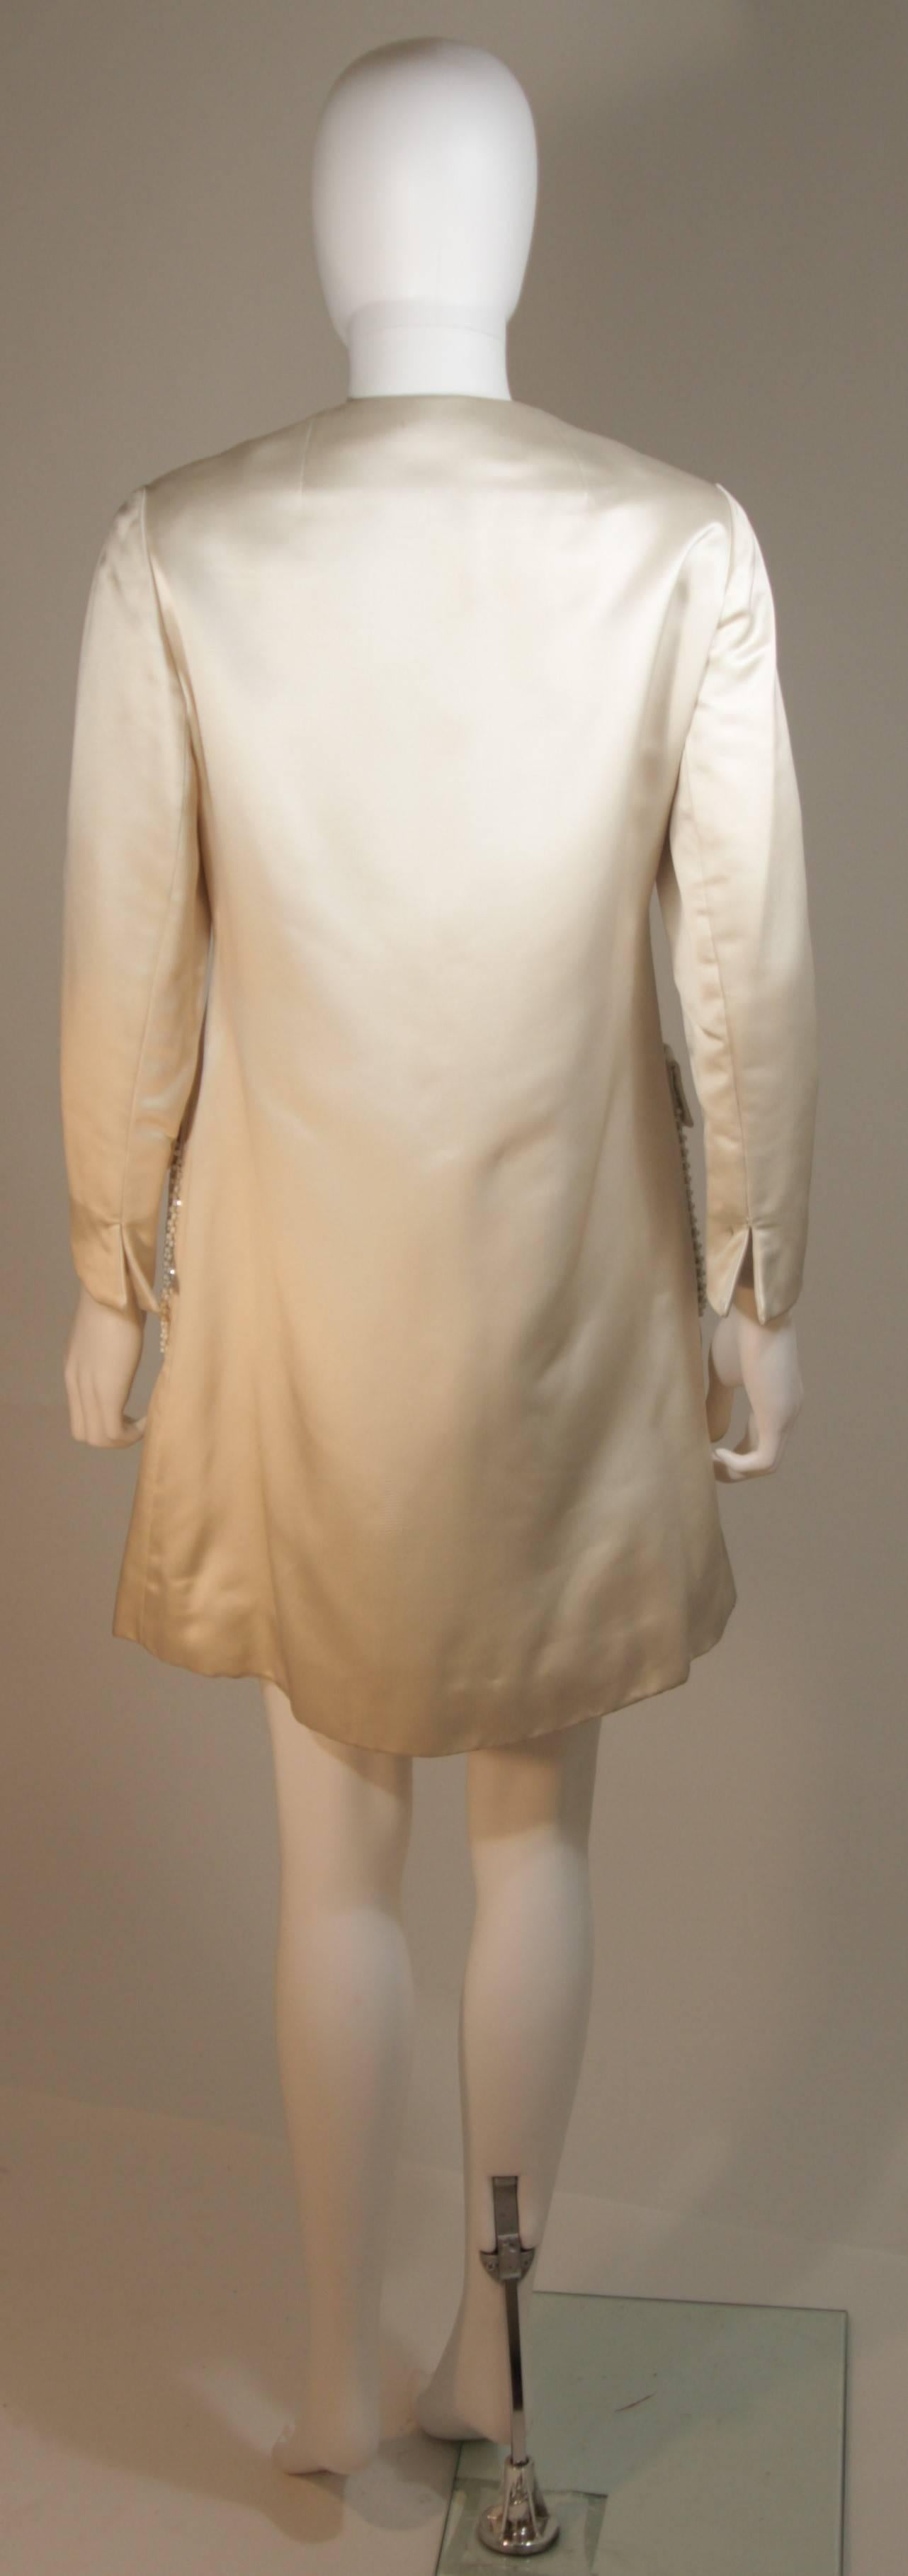 SHEDLOCK Ivory Silk Dress with Rhinestone Pocket Details Size Small Medium For Sale 4